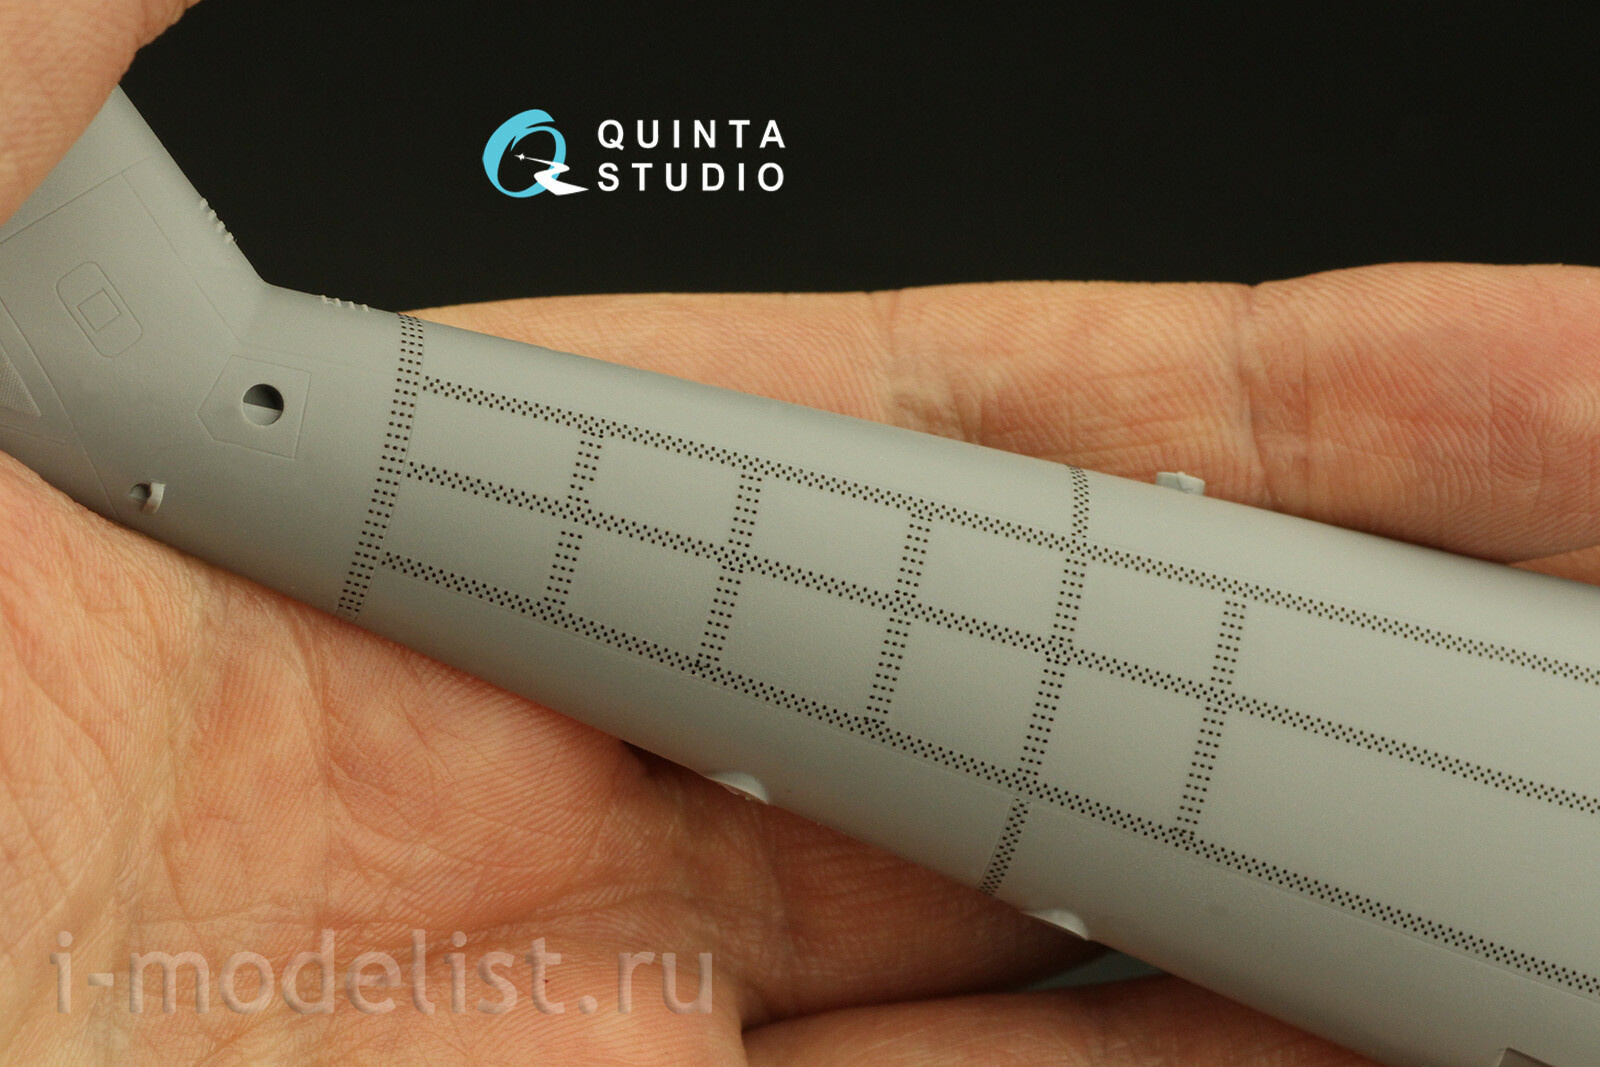 QRV-036 Quinta Studio 1/48 Triple riveting rows (riveting size 0.15 mm, interval 0.6 mm), black, total length 4.4 m